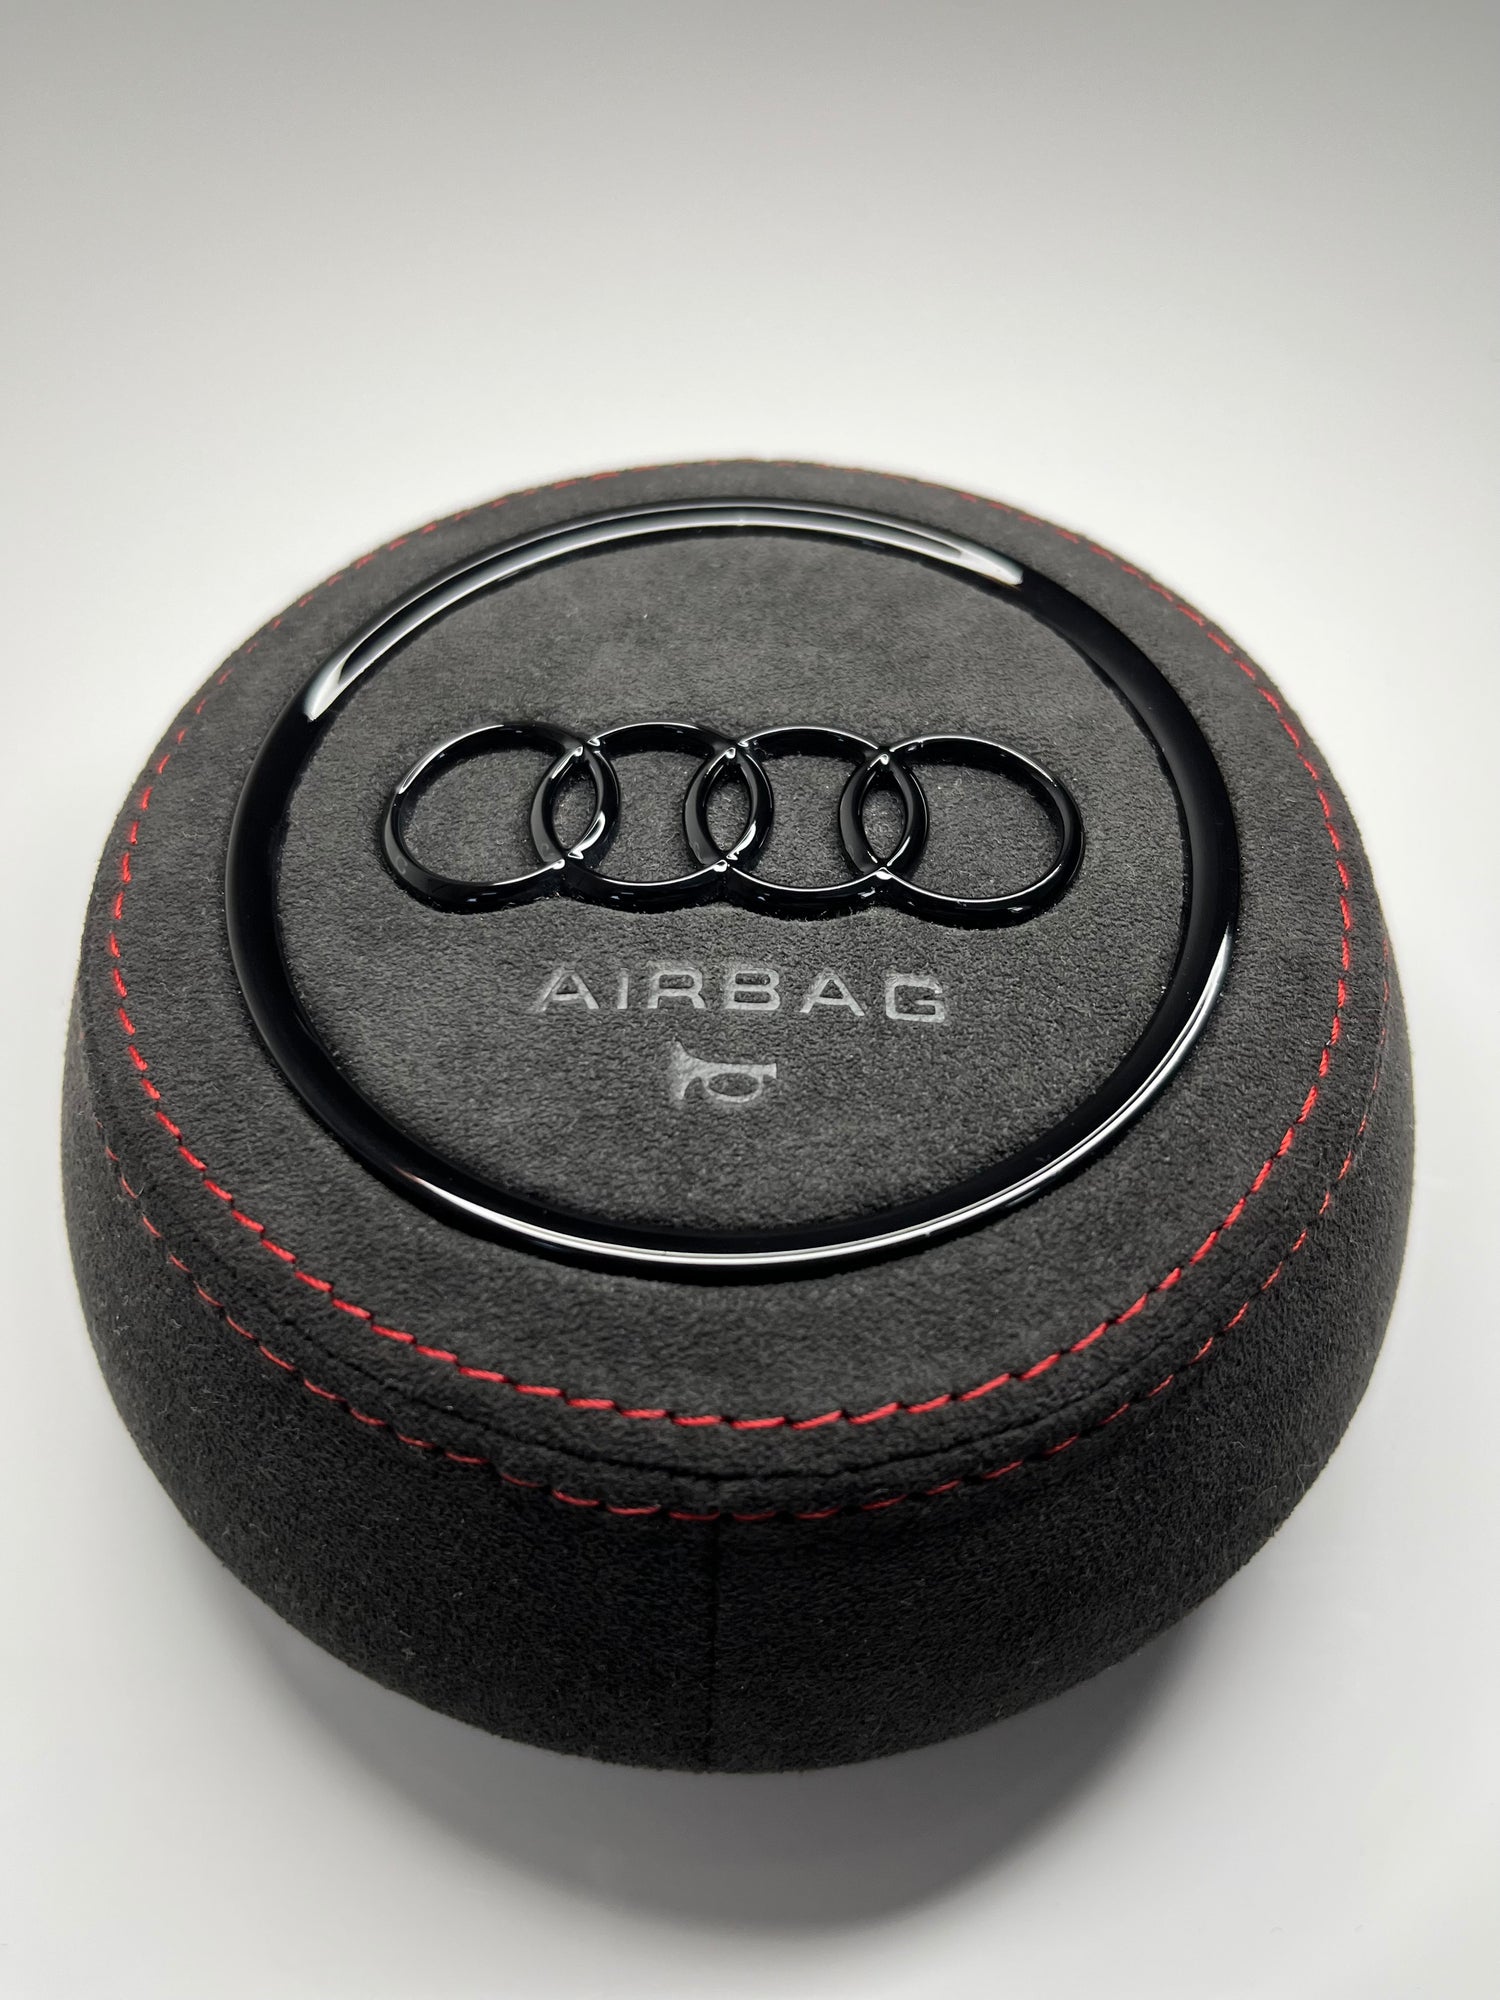 Custom airbag covers